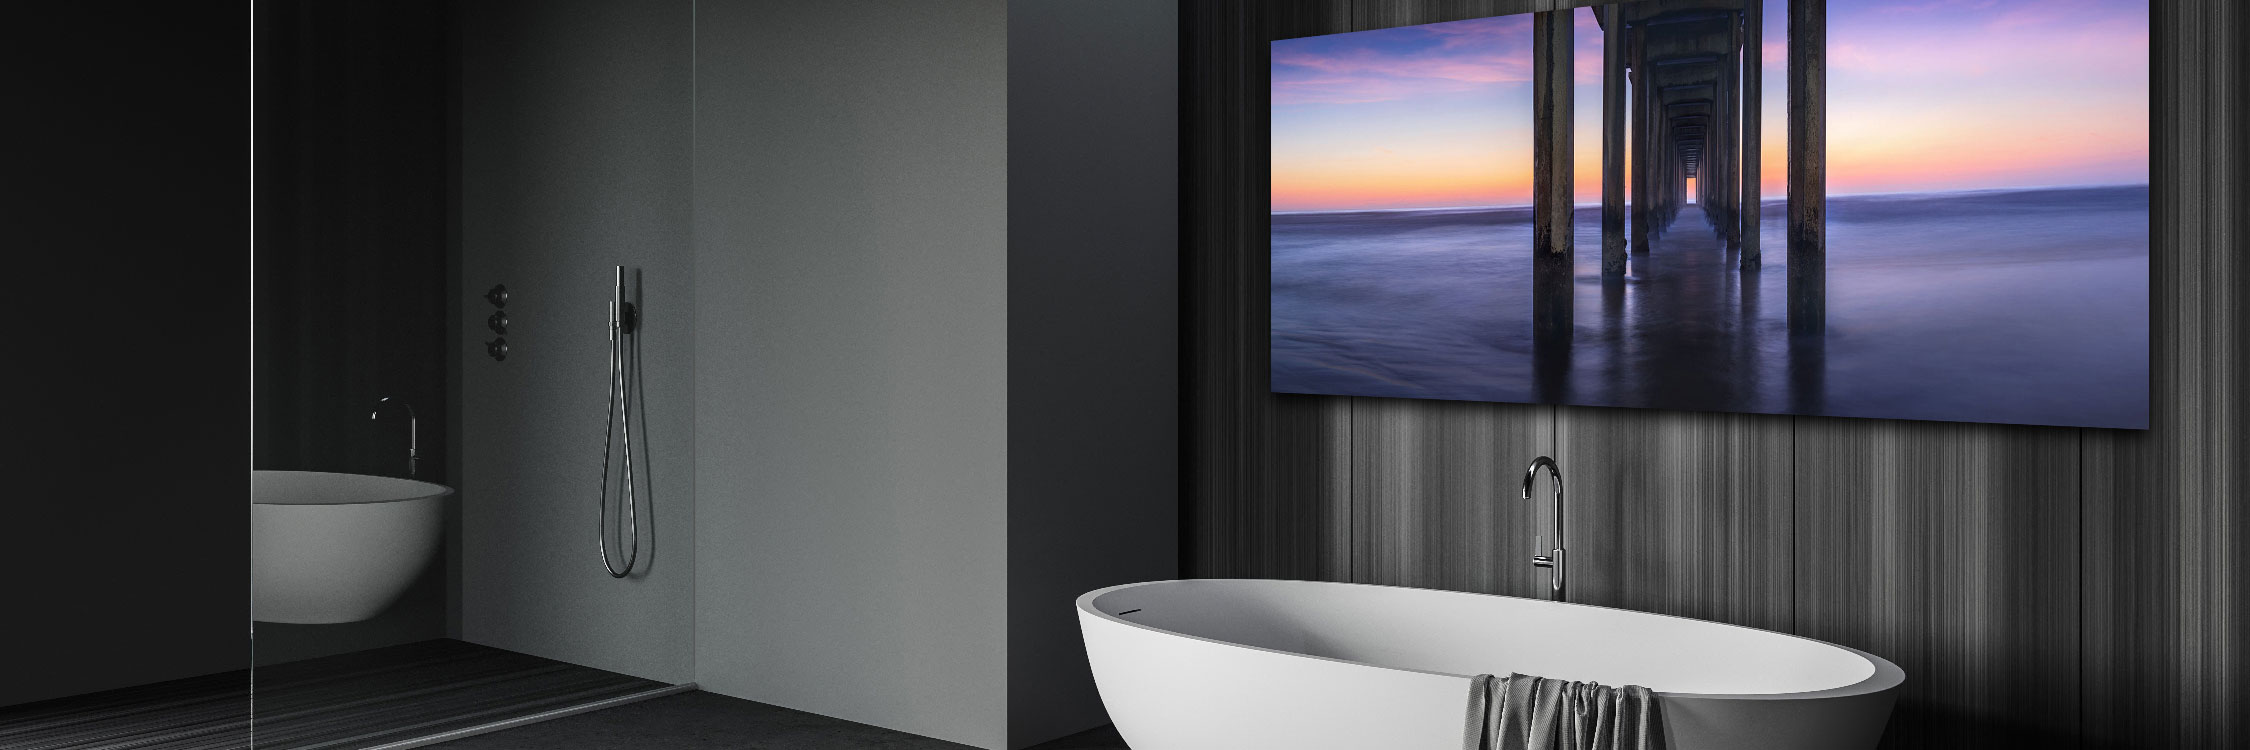 Photography wall decor for bathroom - Ocean Pier California - Gintchin Fine Art